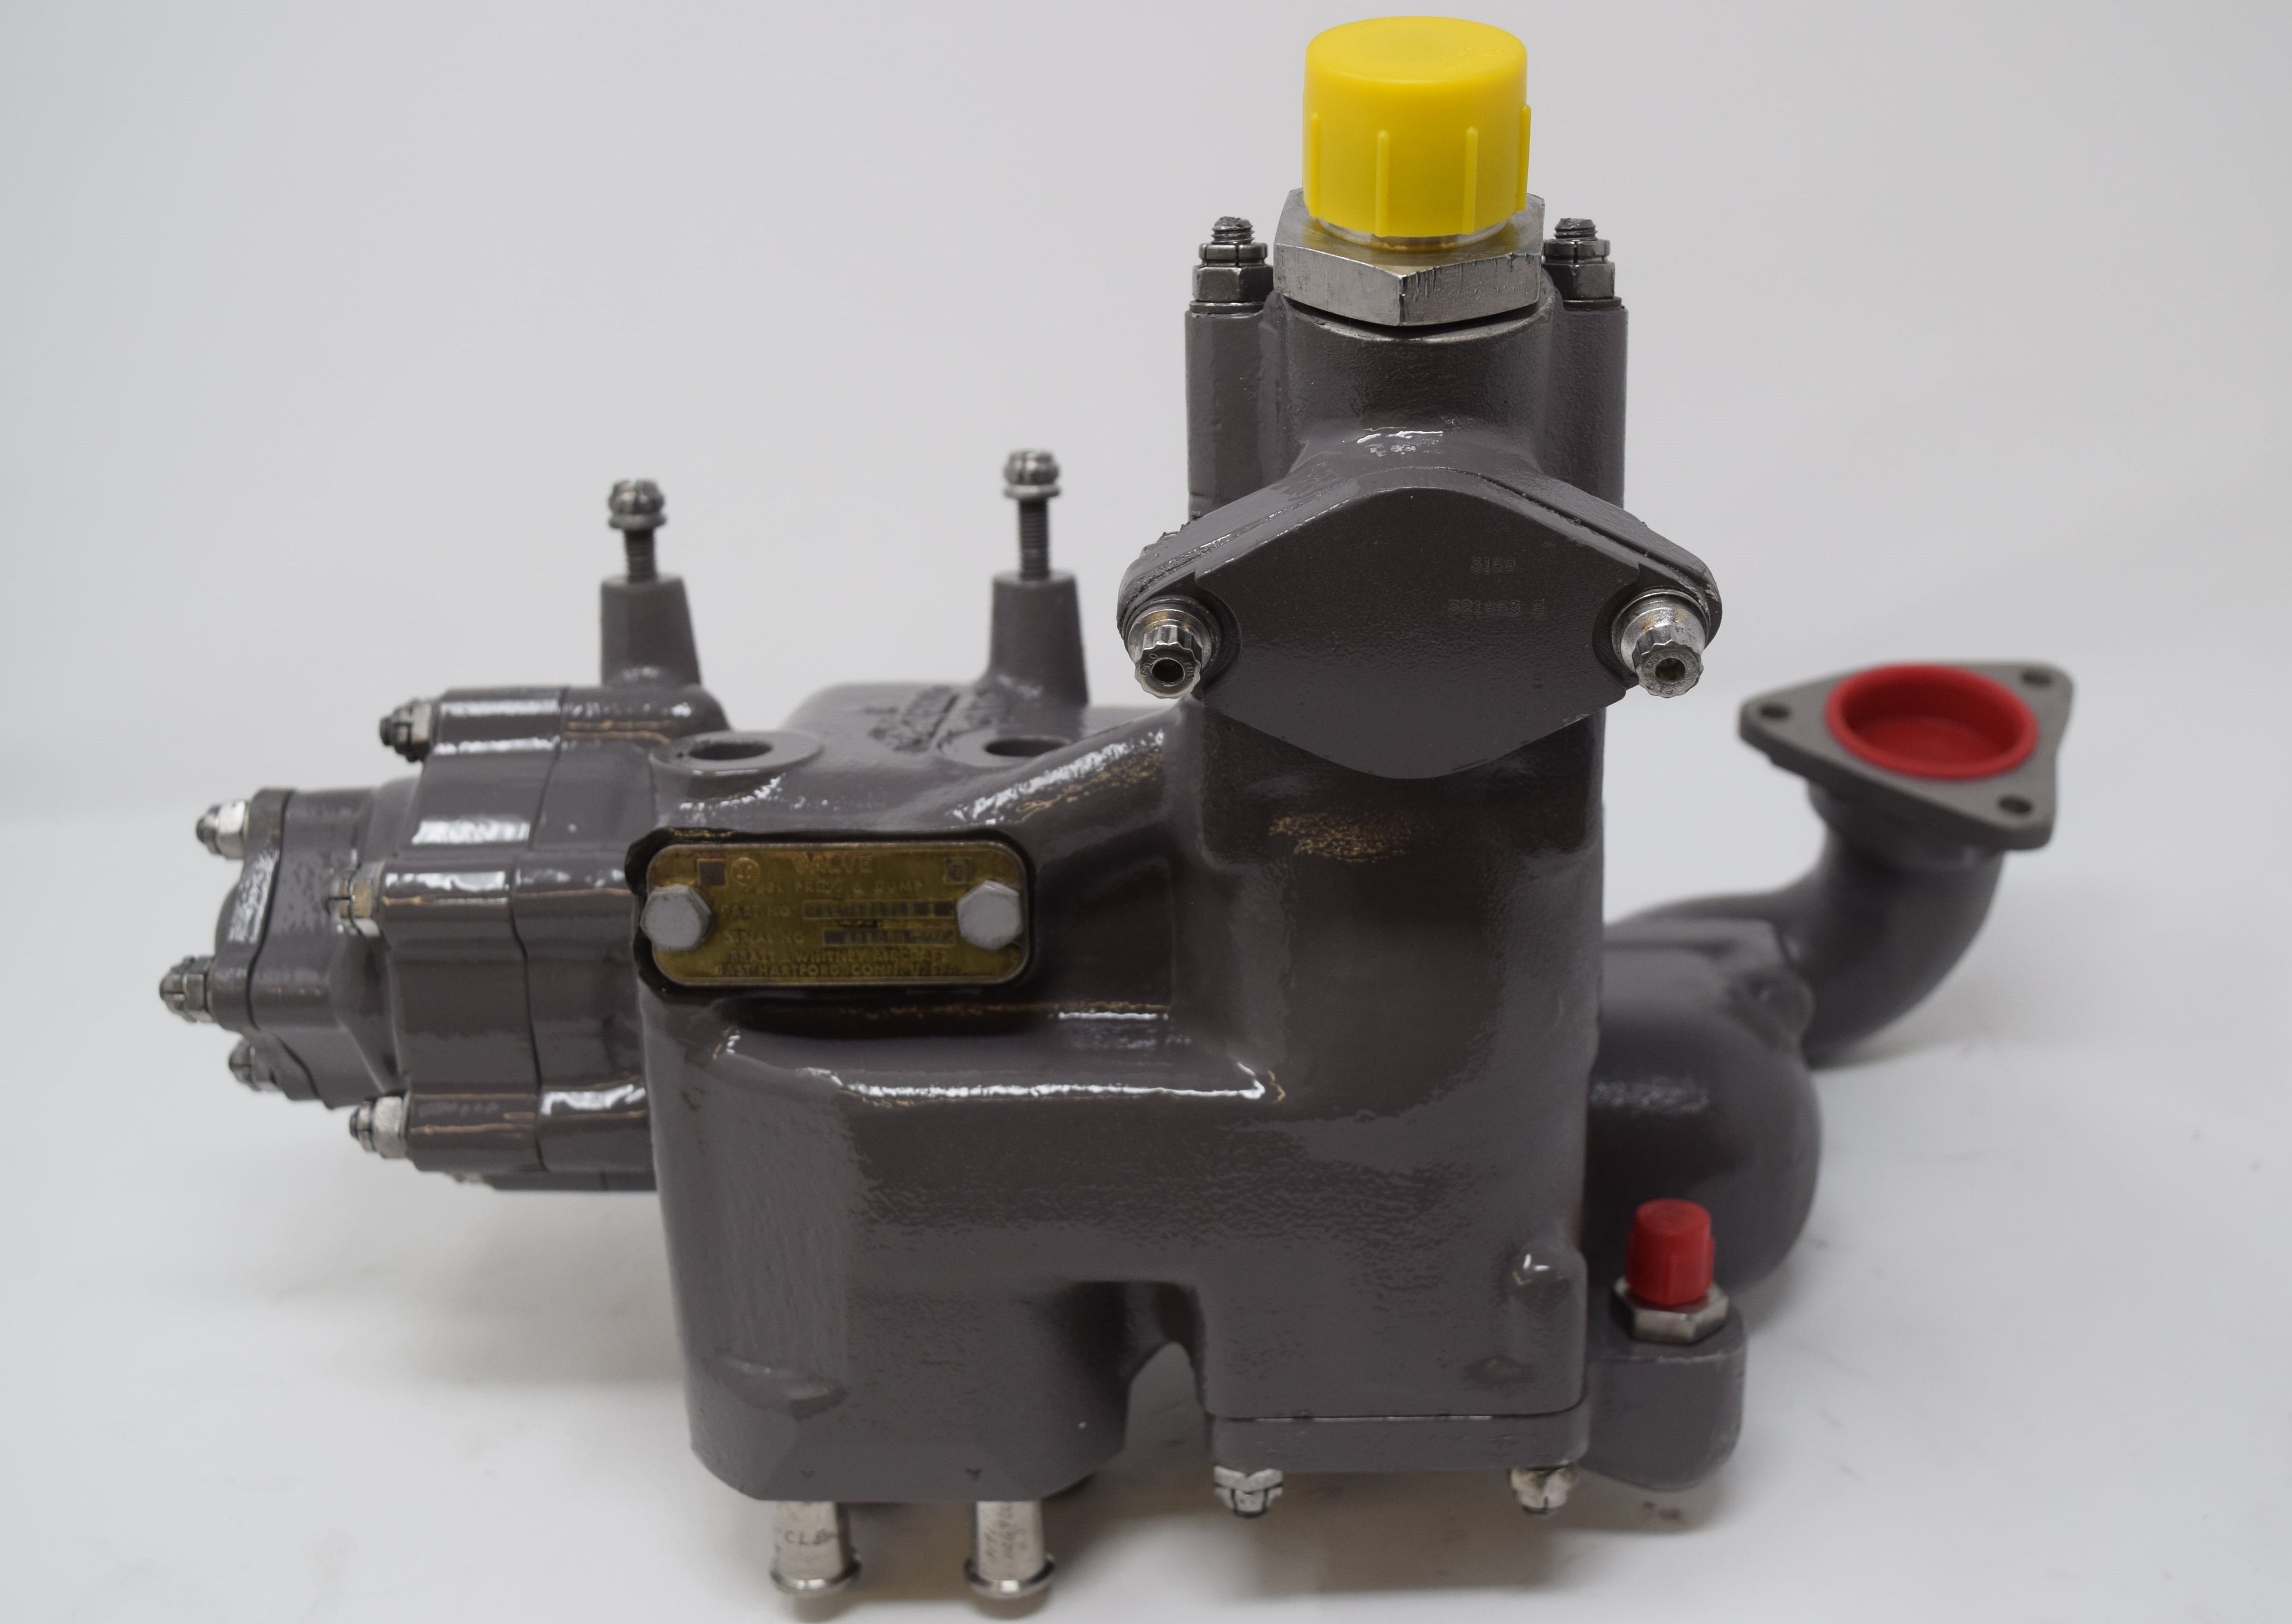 GG4 P&D (Pressure & Dump) valve.